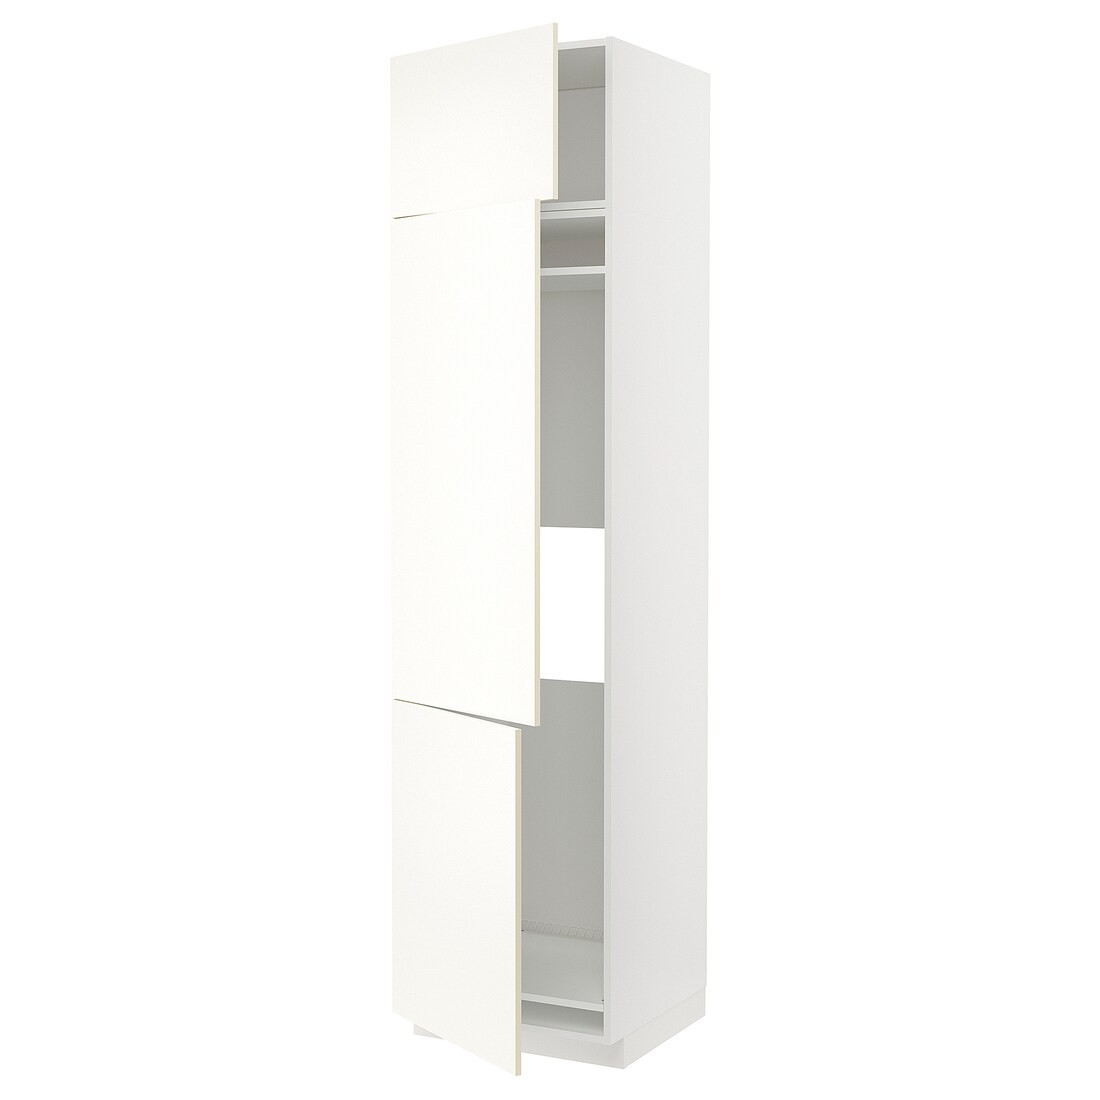 IKEA METOD МЕТОД Высокий шкаф для холодильника / морозильника / 3 дверцы, белый / Vallstena белый 99507364 995.073.64